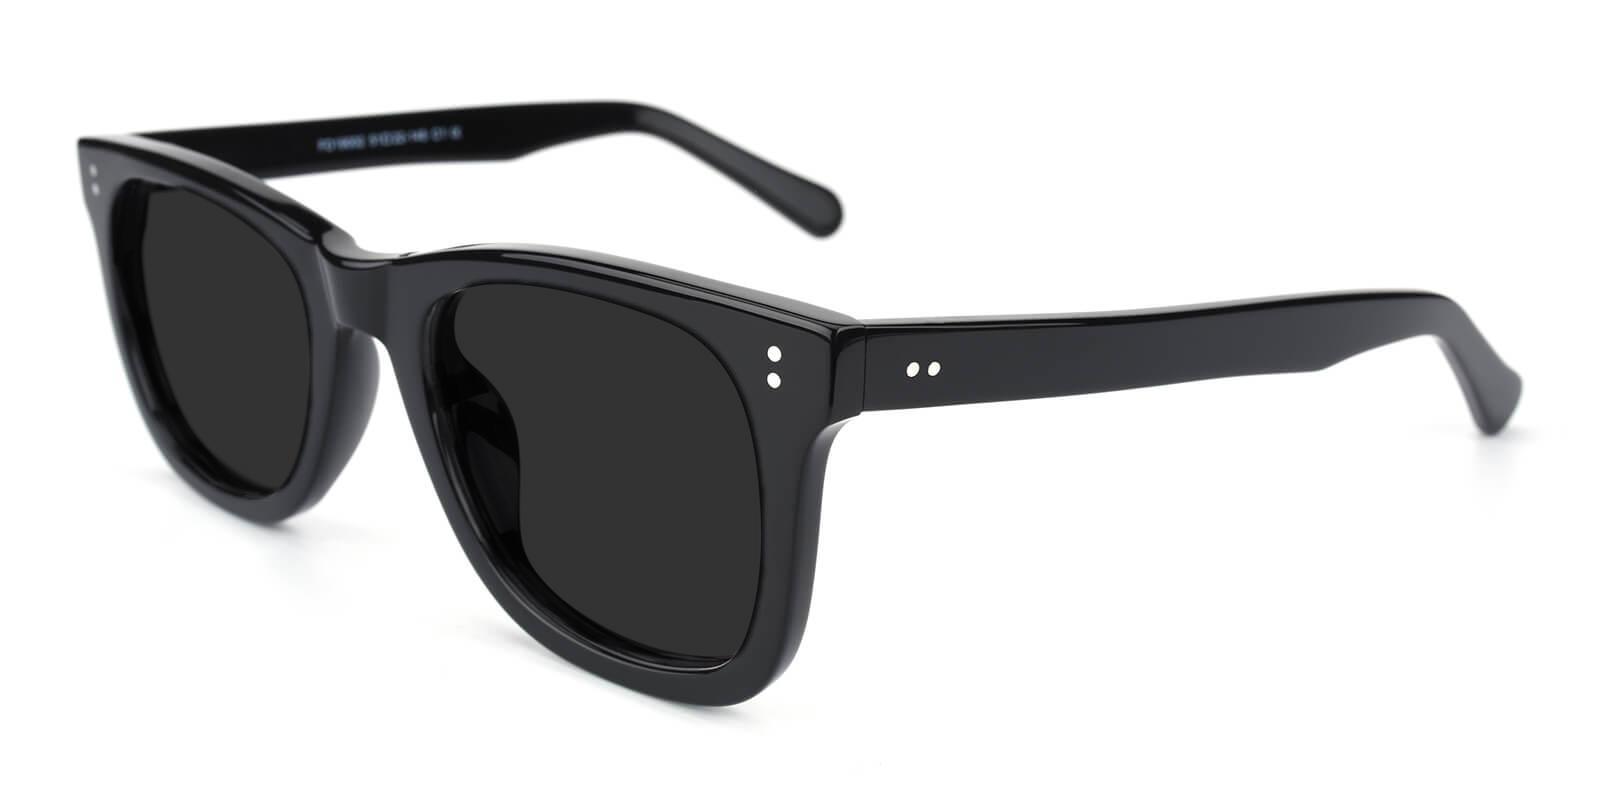 Notting Black Acetate Sunglasses , UniversalBridgeFit Frames from ABBE Glasses